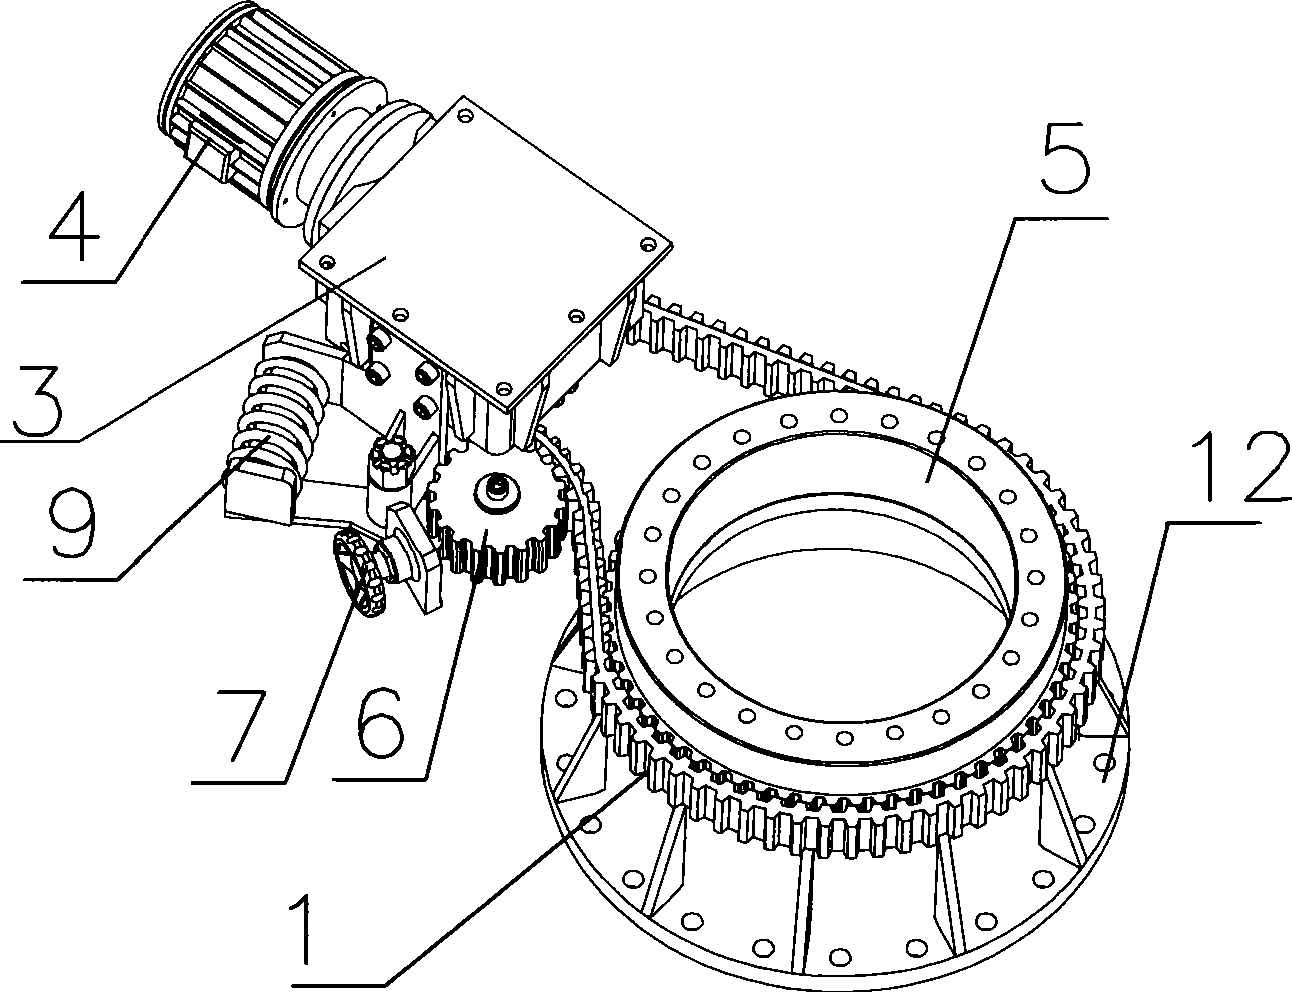 Downwind aerogenerator gyrodamping and locking mechanism